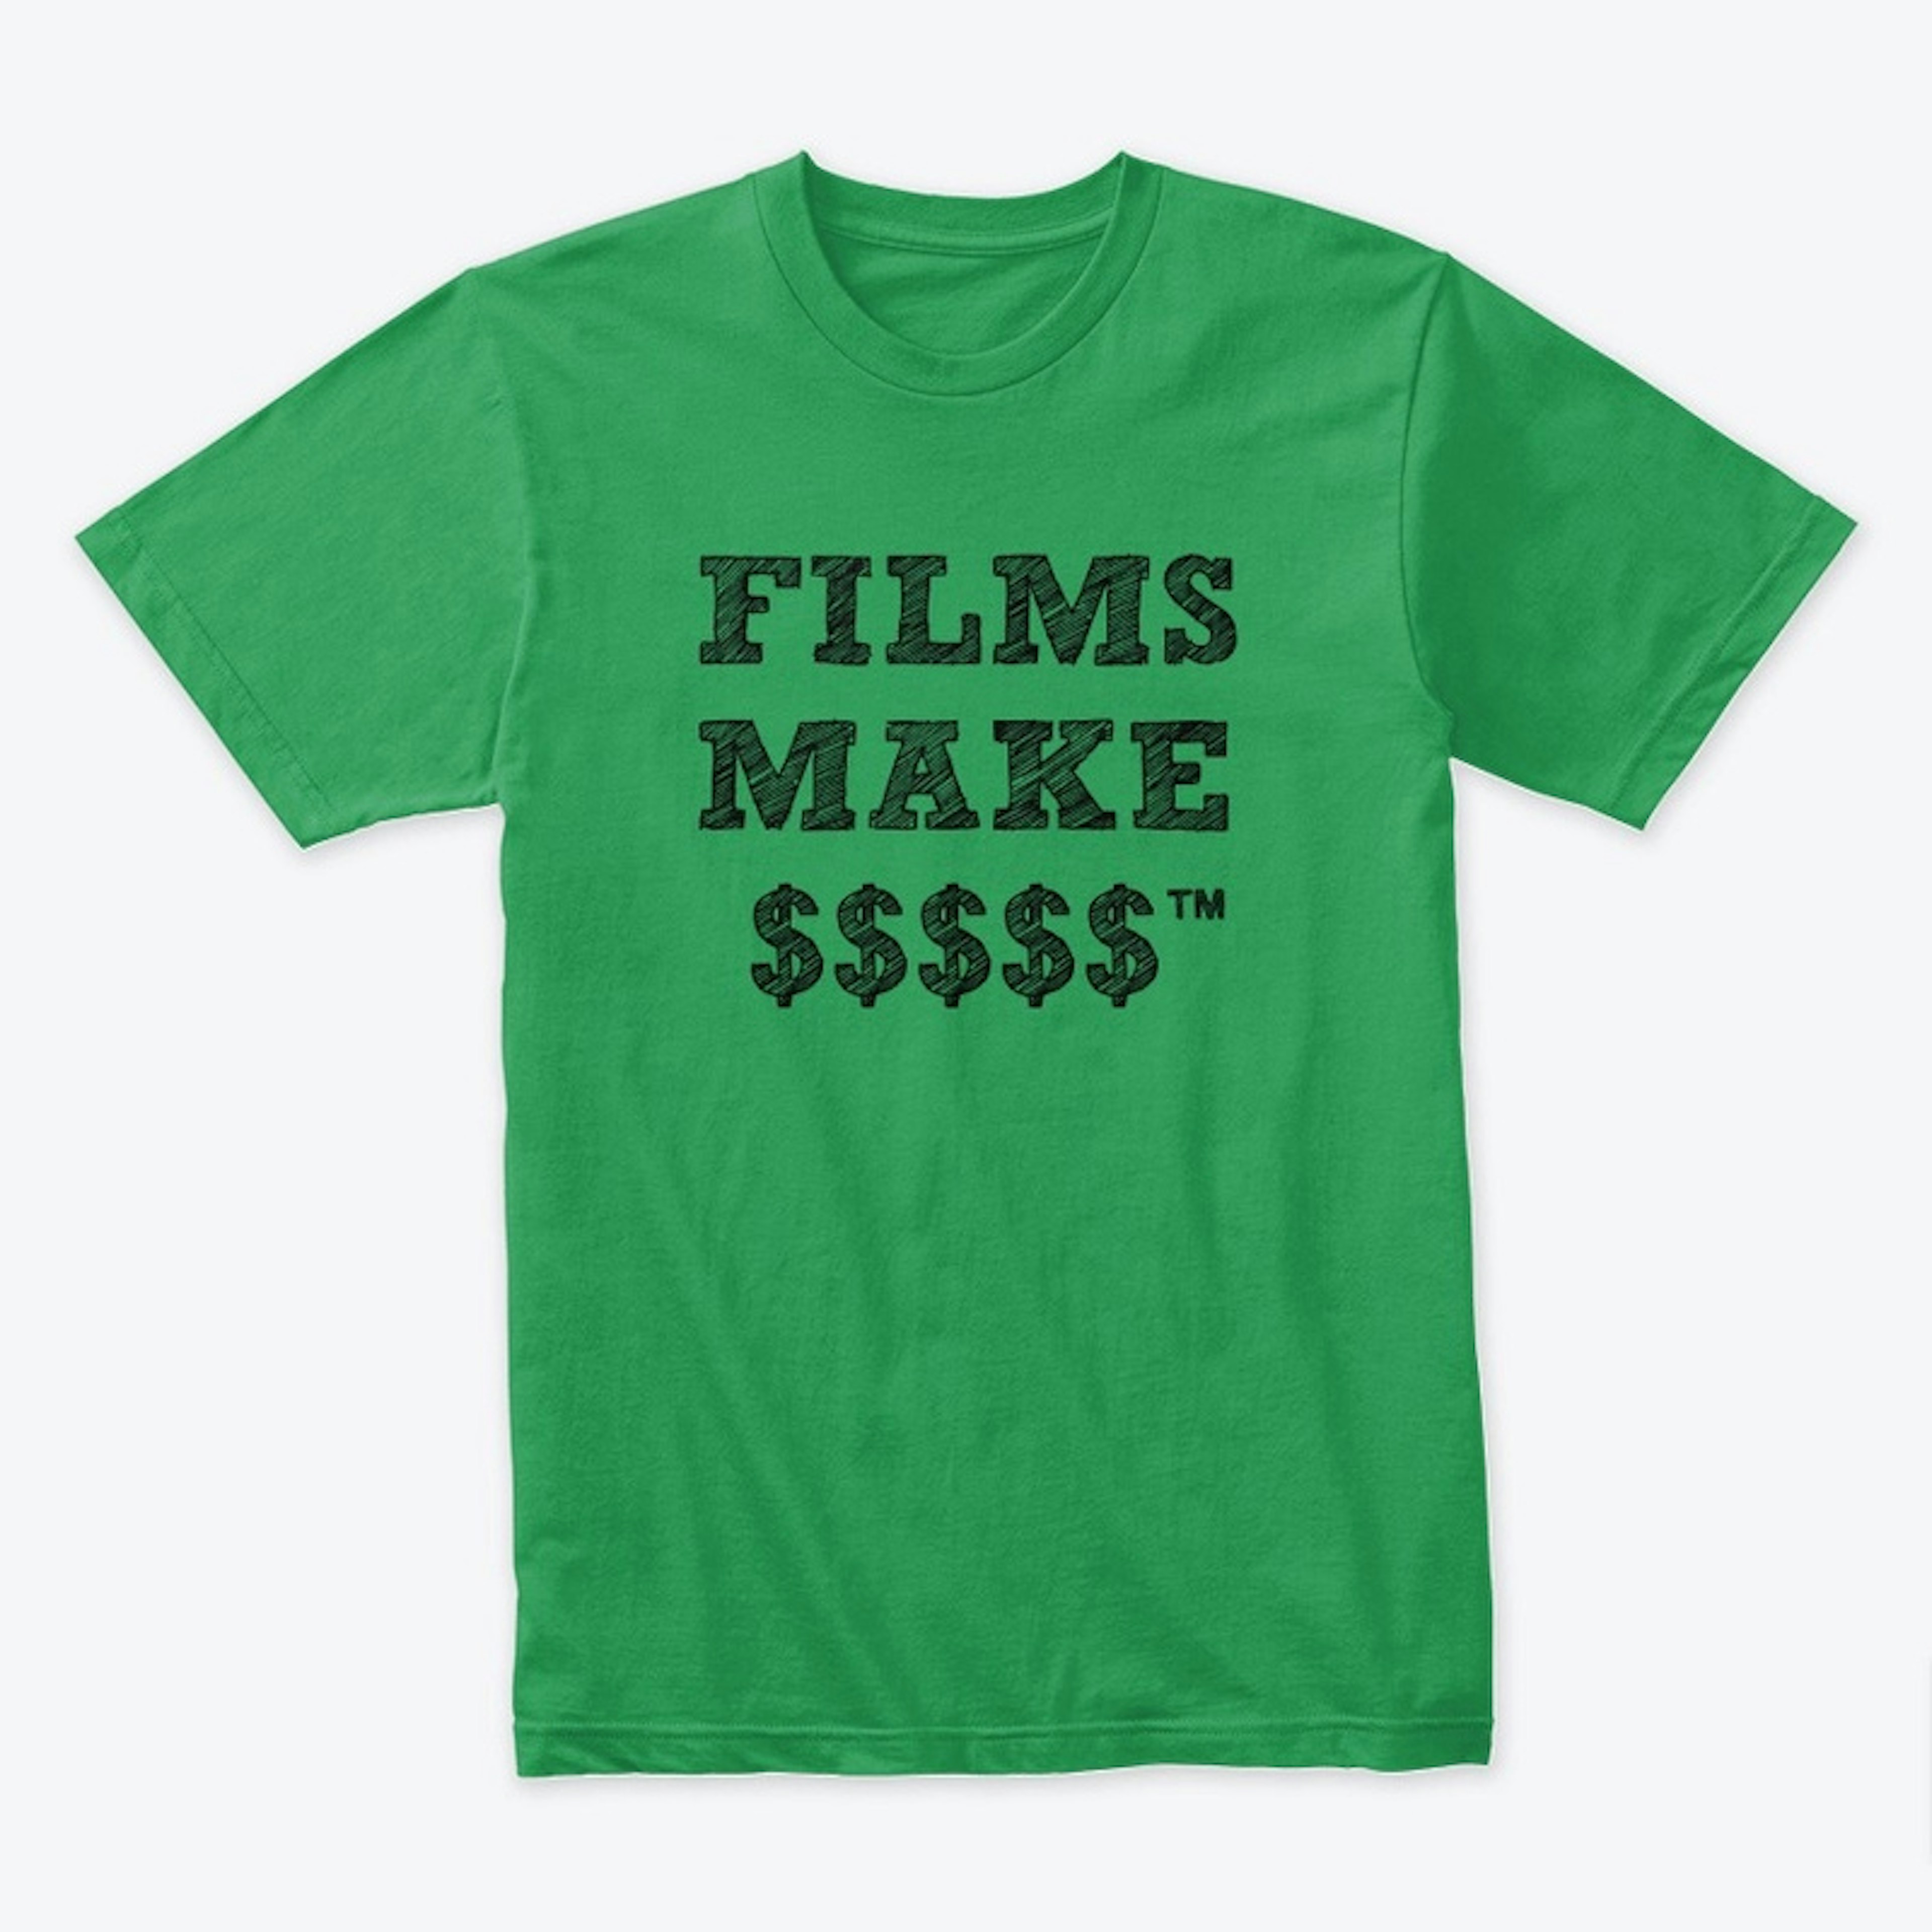 FILMS MAKE $$$$$